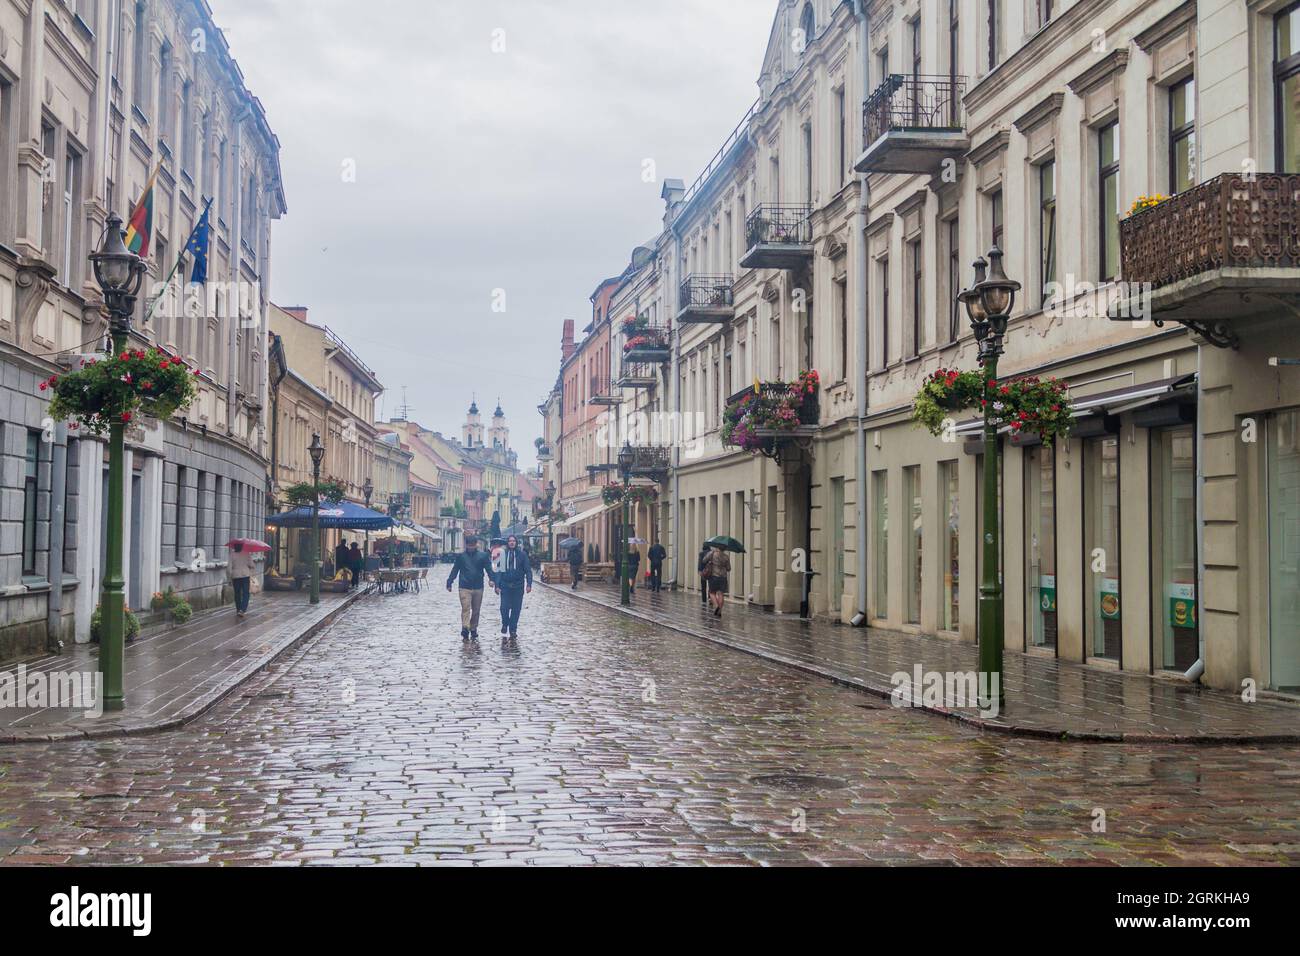 KAUNAS, LITHUANIA - AUGUST 16, 2016: People walk along Vilniaus gatve street in Kaunas, Lithuania Stock Photo